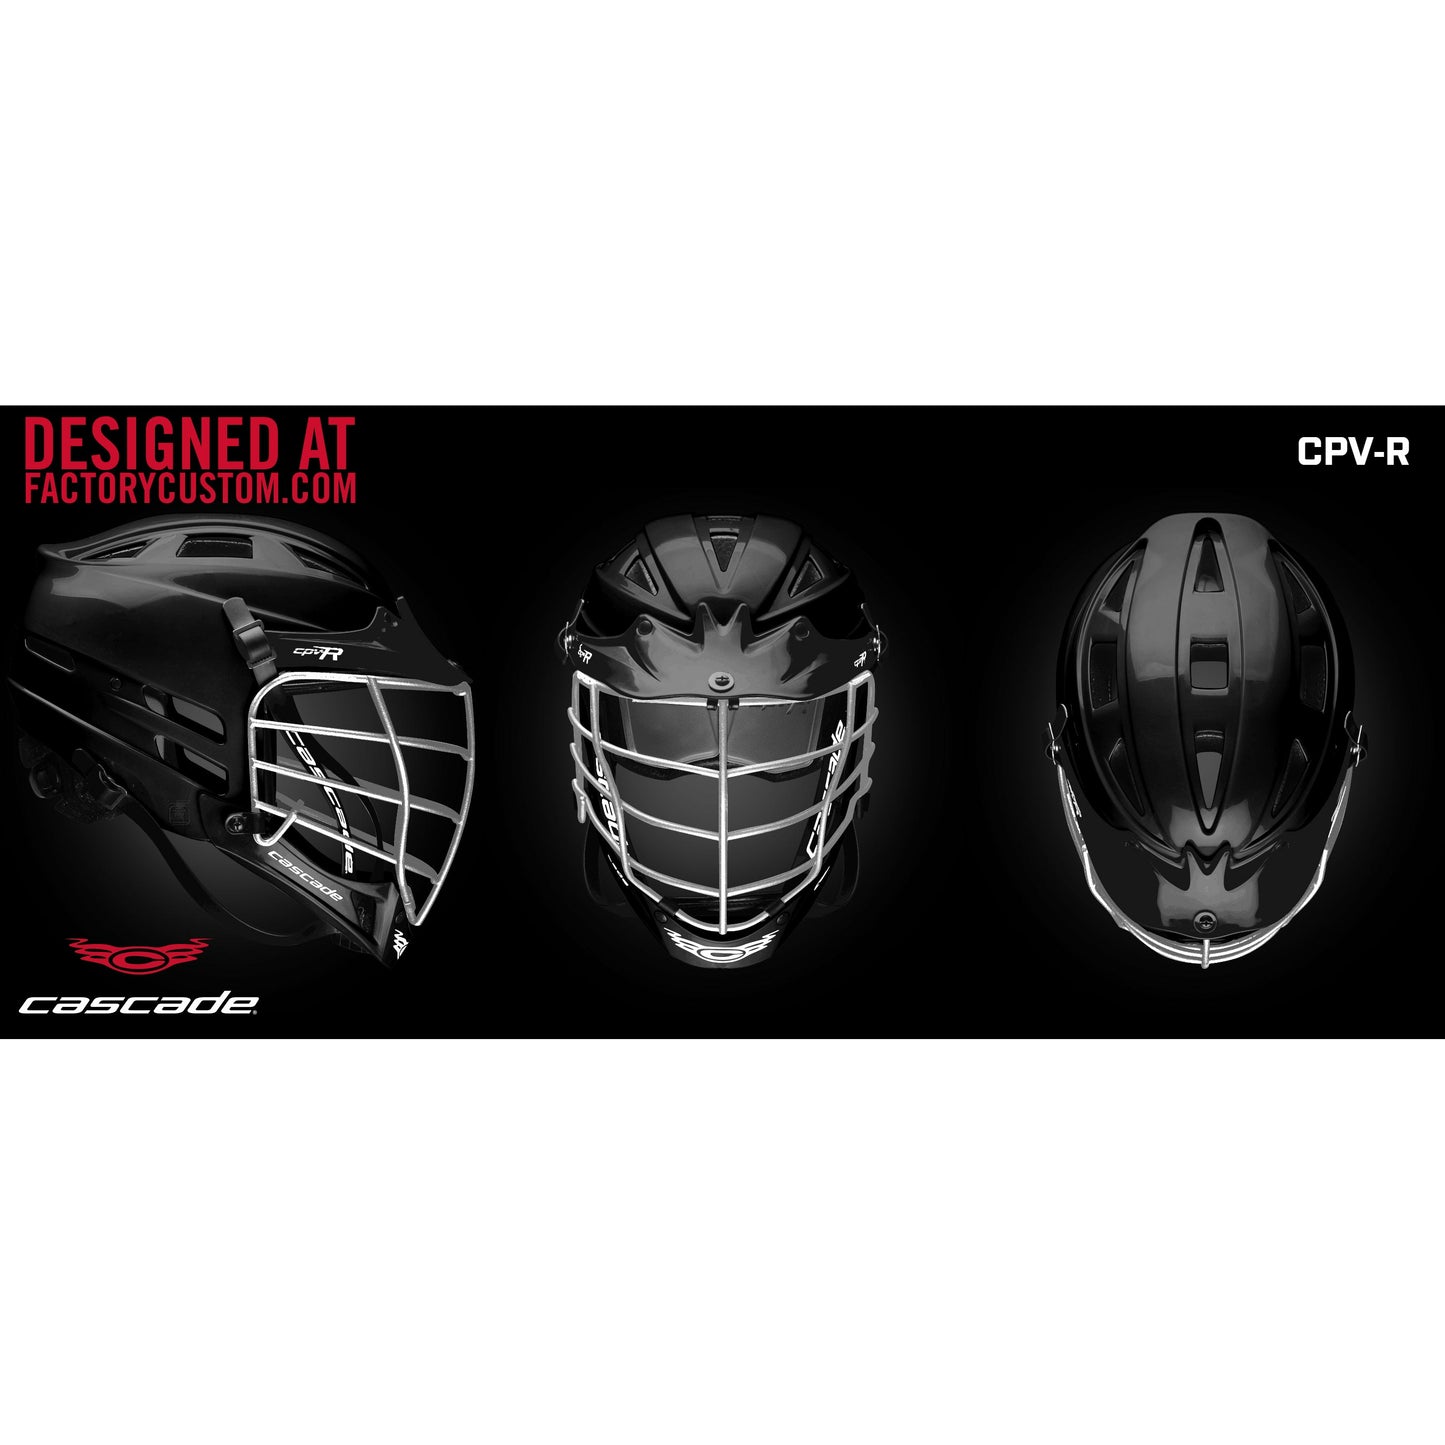 Cascade CPVR Lacrosse Helmet Black with Silver Mask